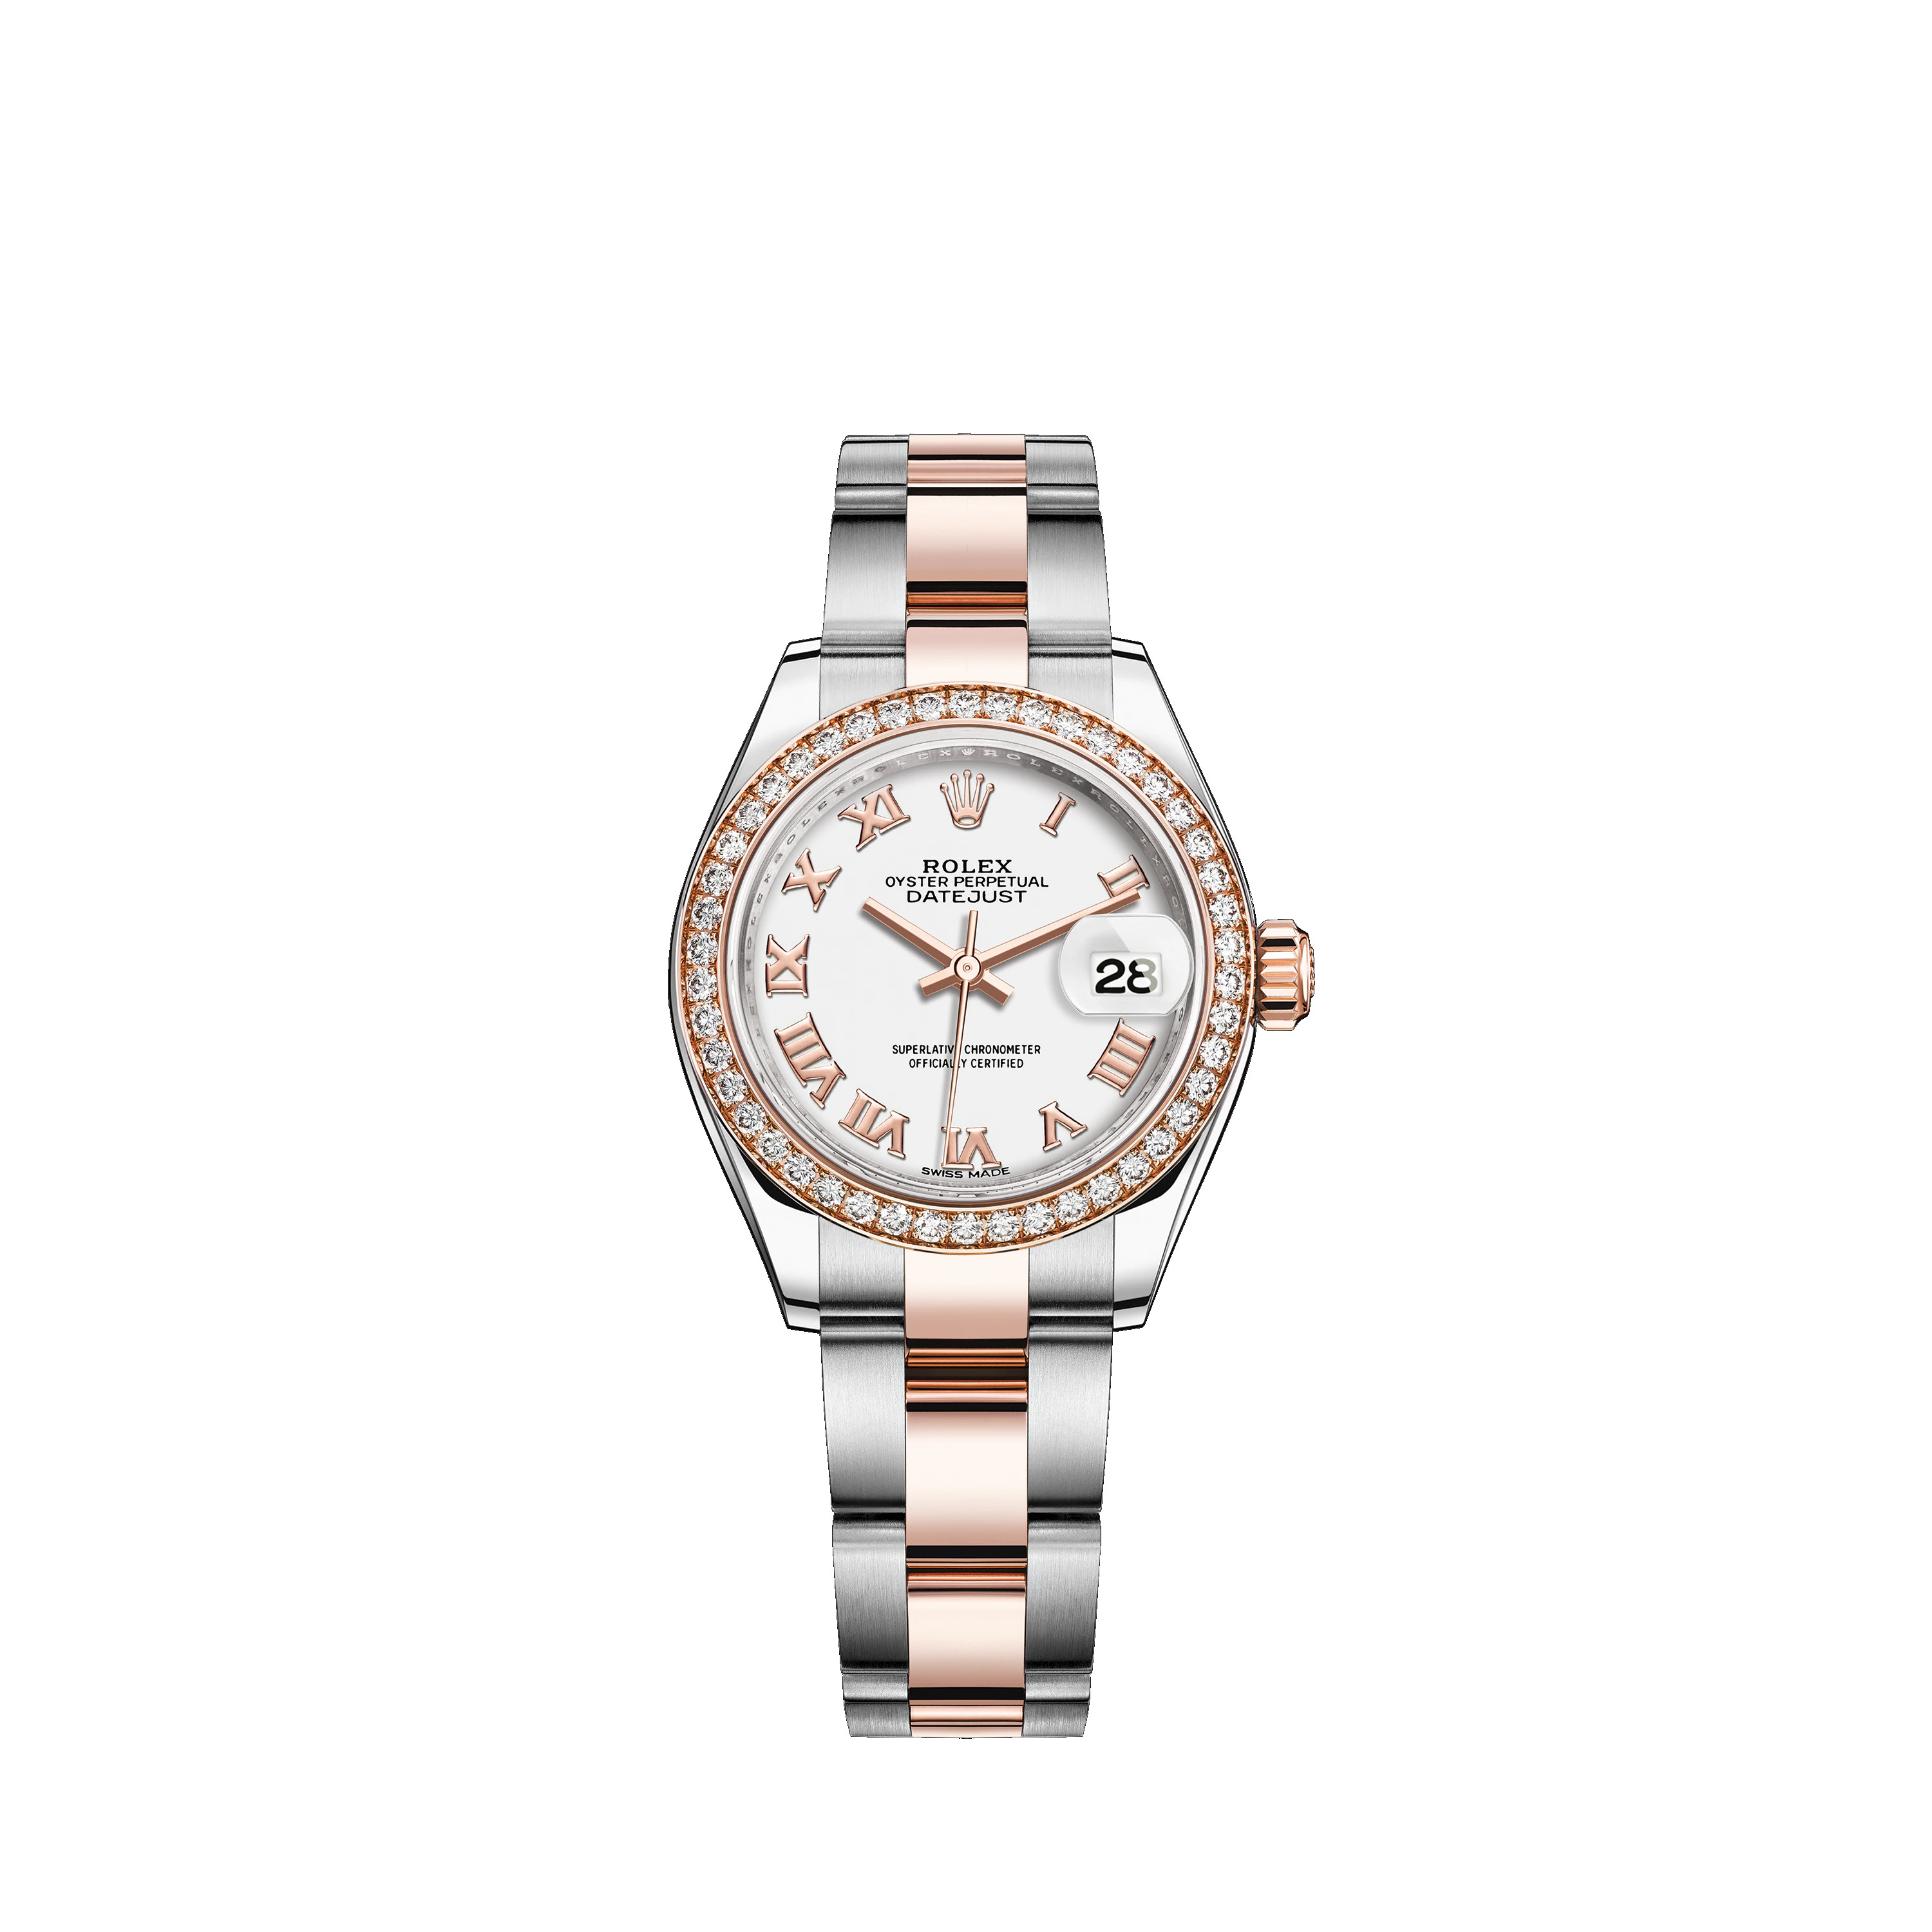 Lady-Datejust 28 279381RBR Rose Gold & Diamonds Watch (White)